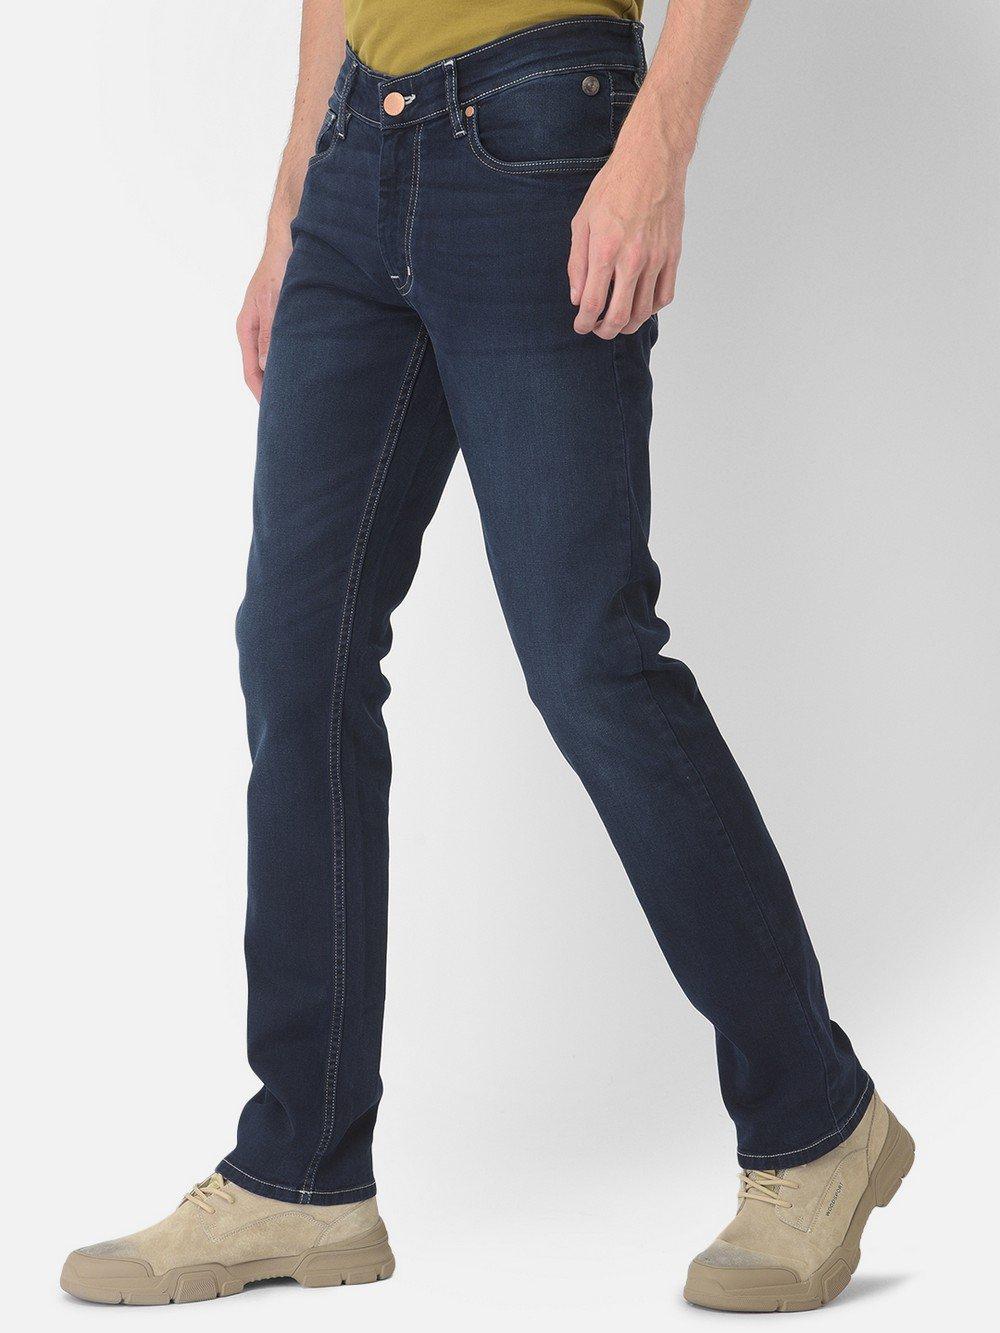 Buy Dark Blue Classic Slim Men's Jeans Online